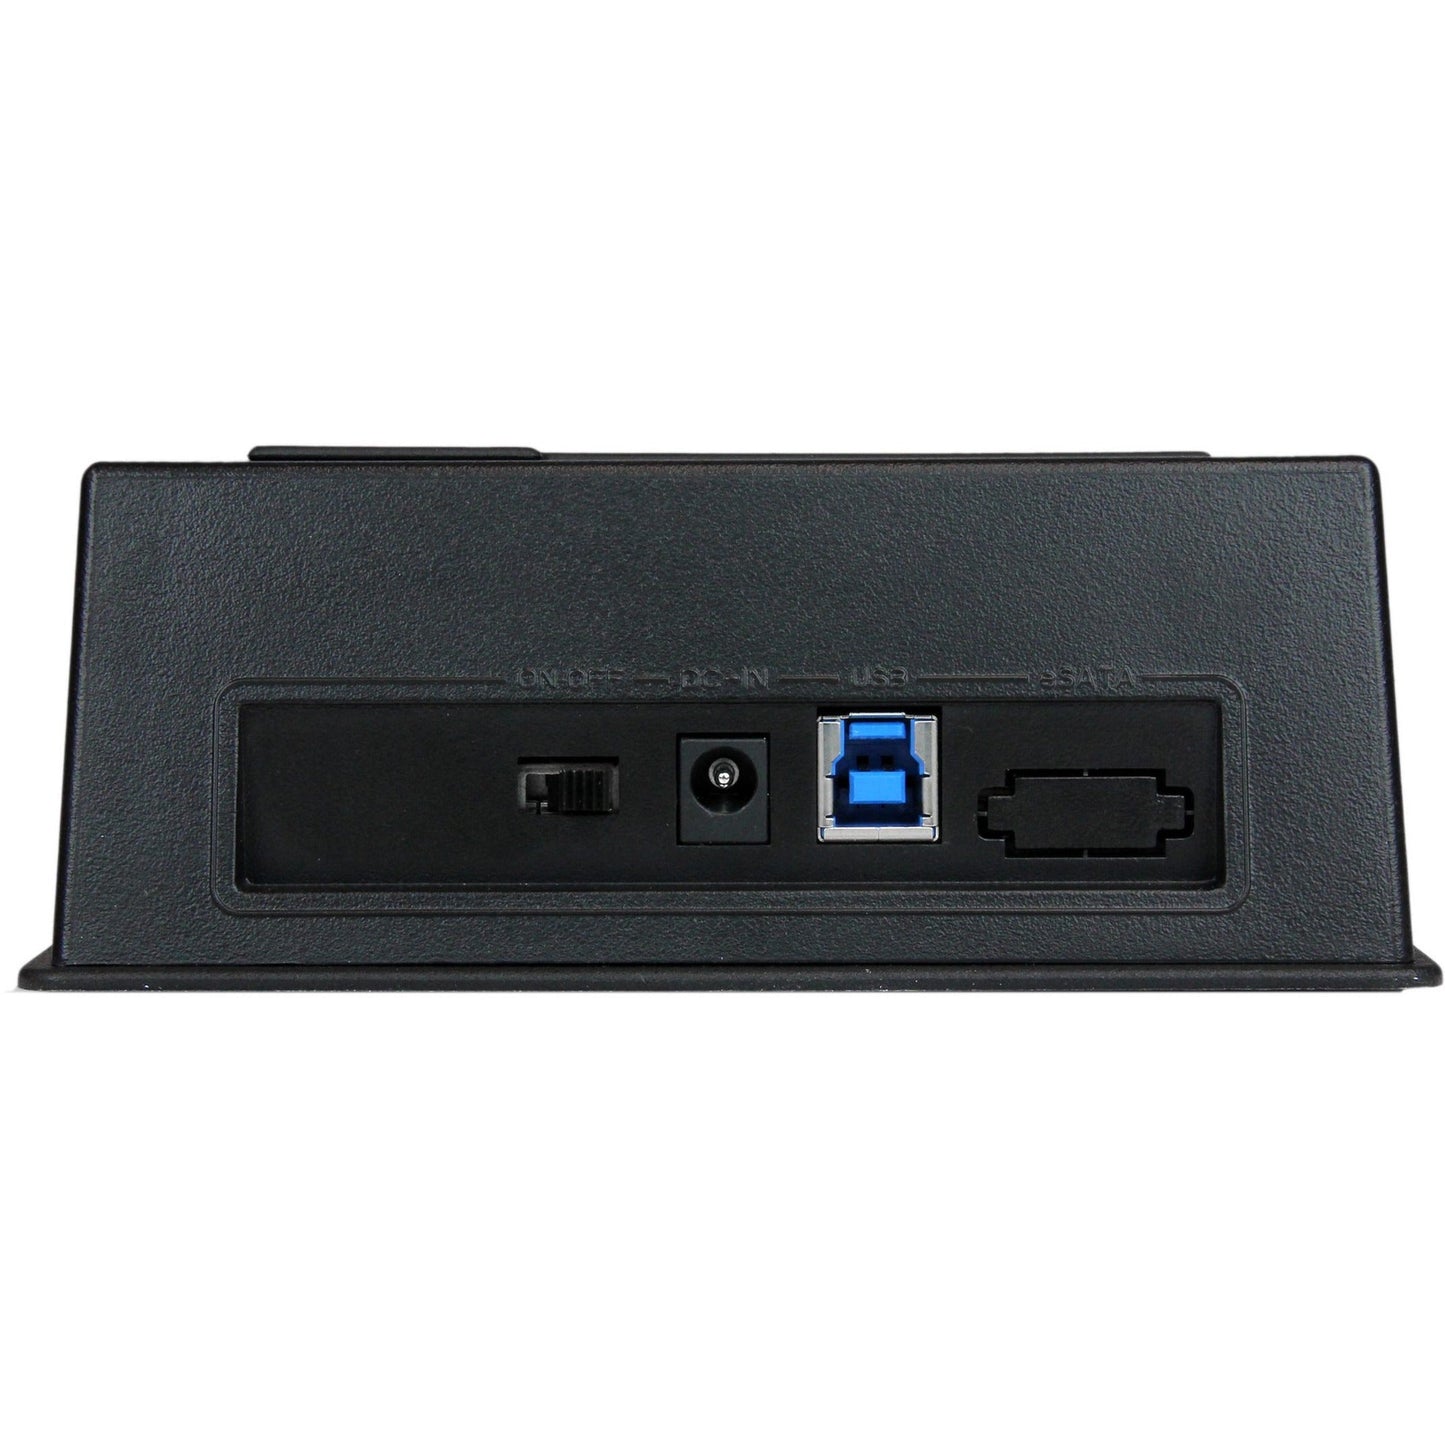 StarTech.com Single Bay USB 3.0 to SATA Hard Drive Docking Station USB 3.0 (5 Gbps) Hard Drive Dock External 2.5/3.5" SATA HDD/SSD Dock